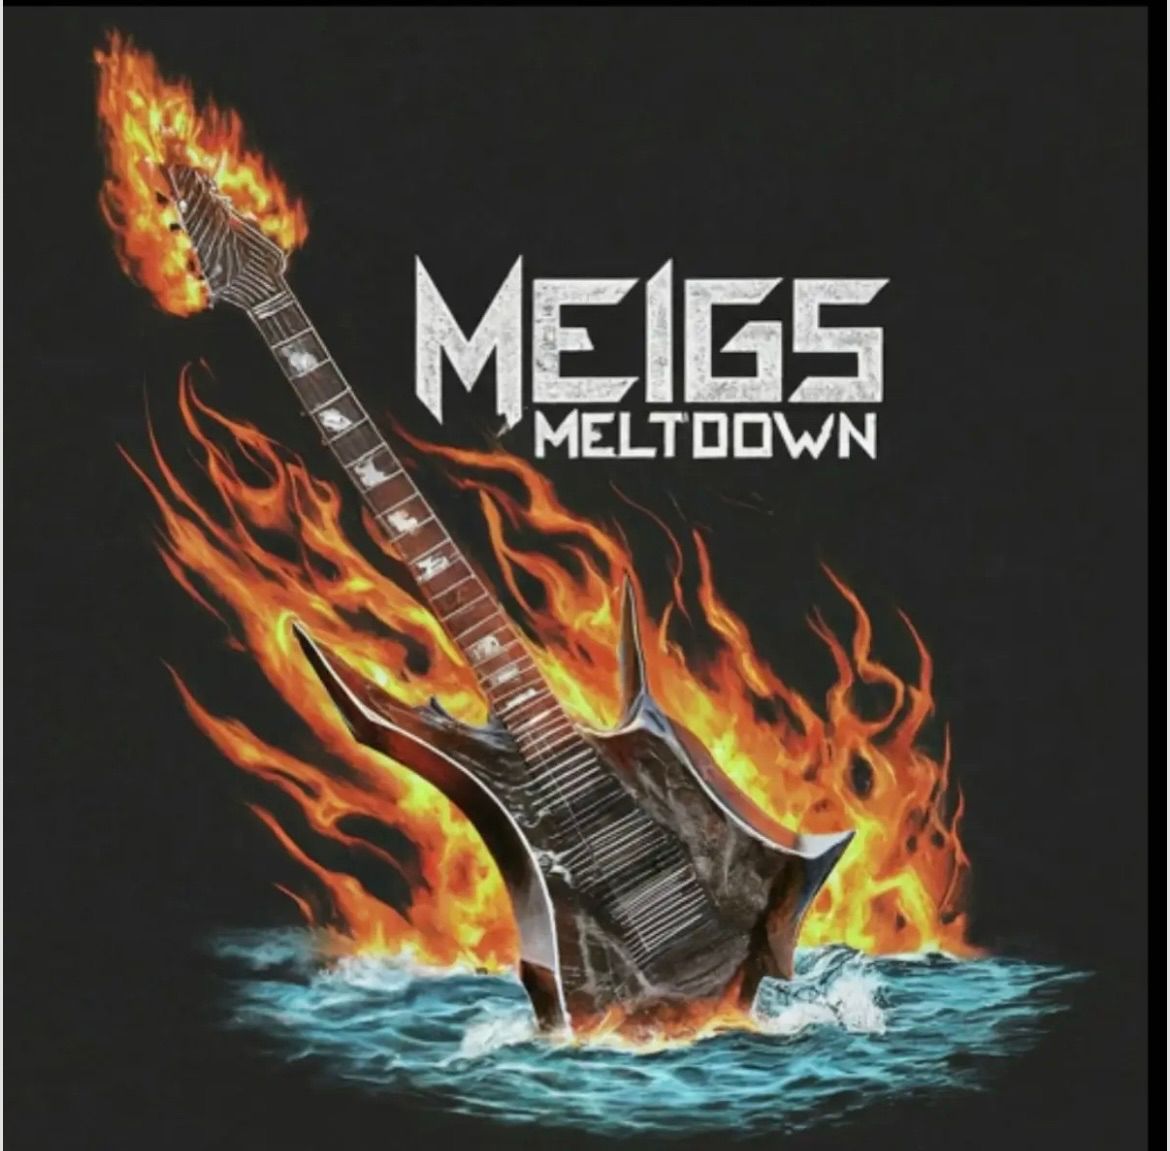 Dragons Eye @ Meigs Meltdown